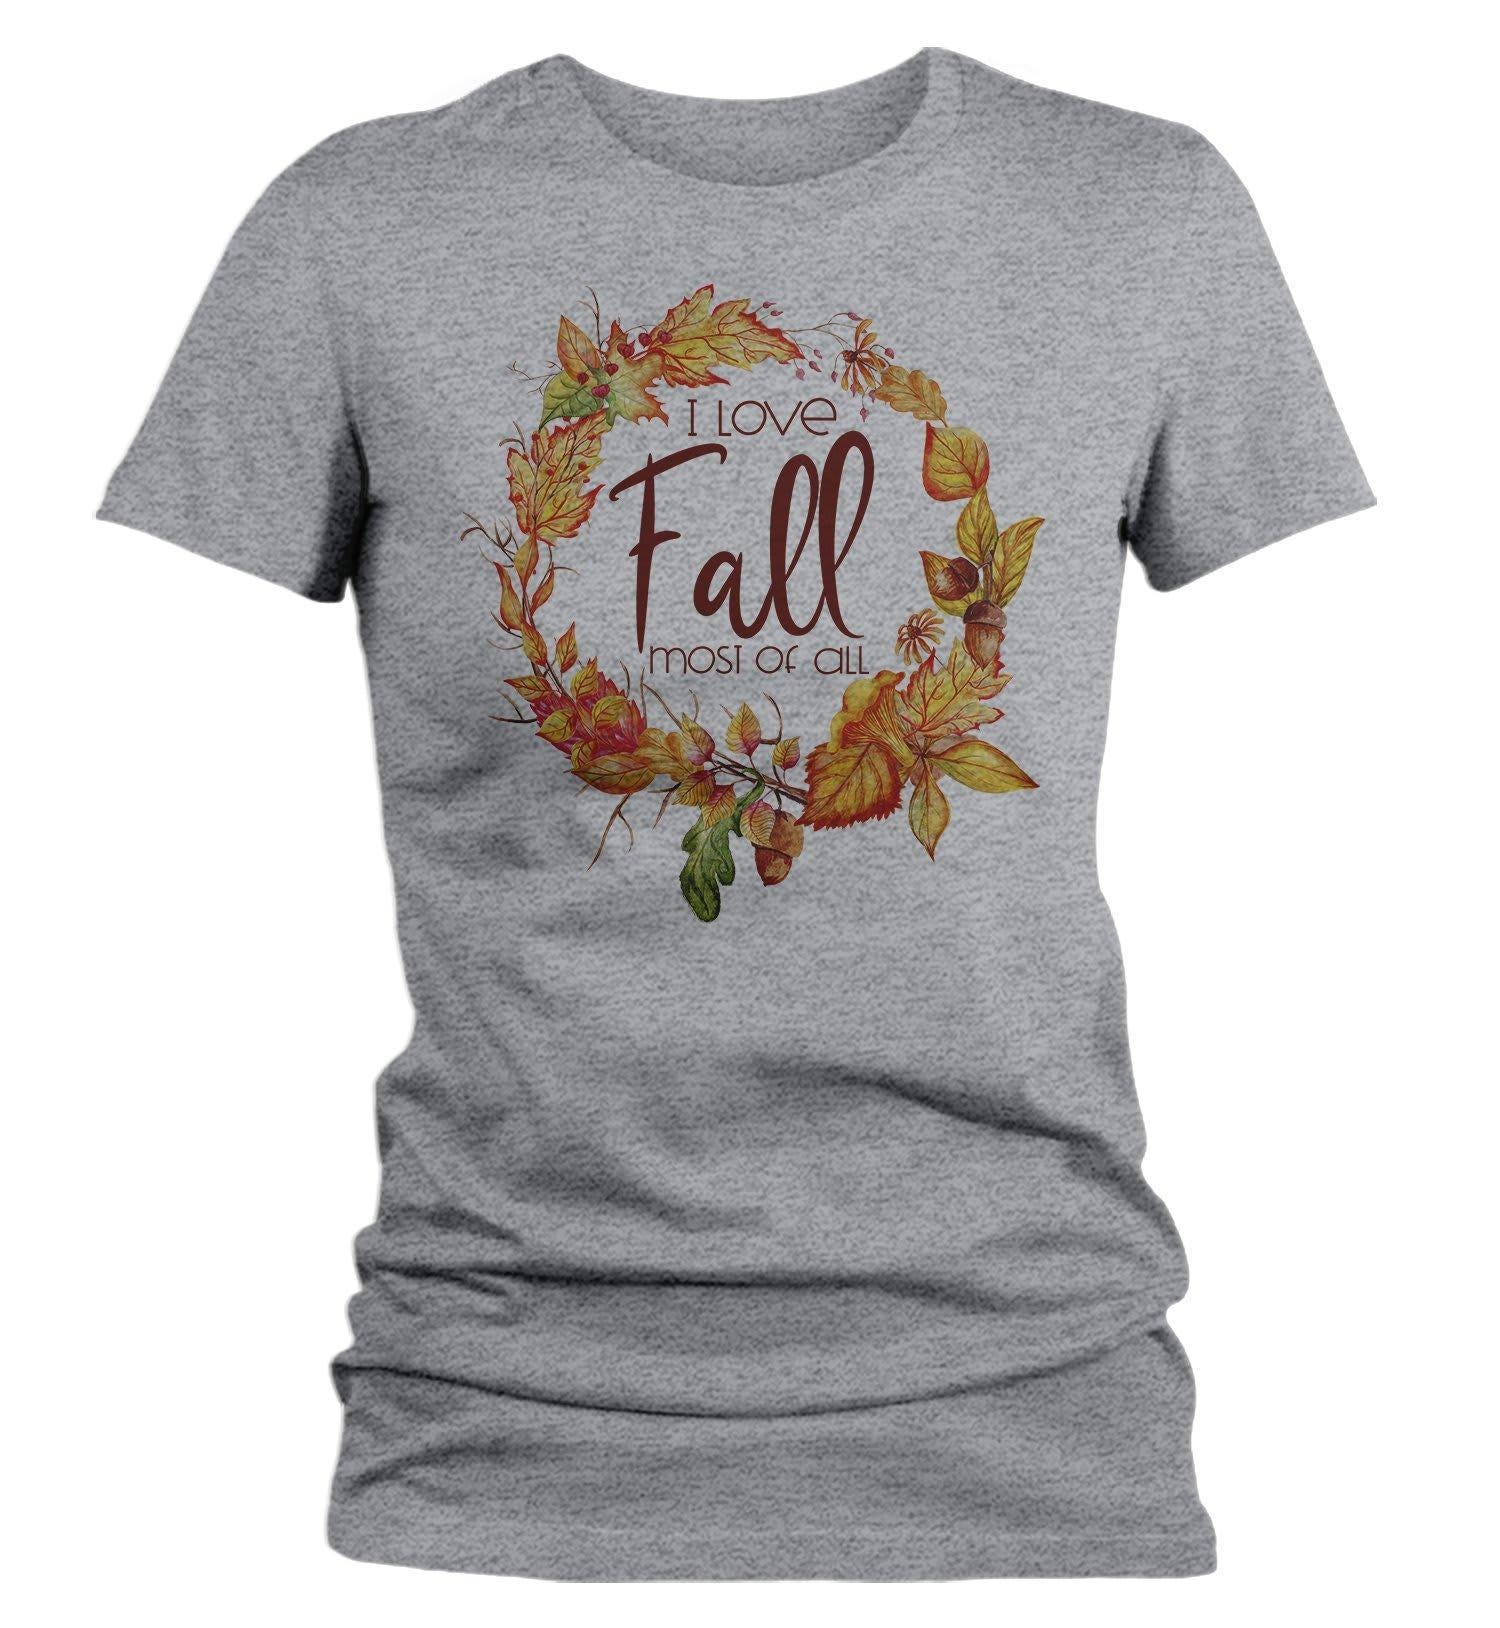 Women's Love Fall T Shirt Wreath Graphic Tee Love Fall Most 